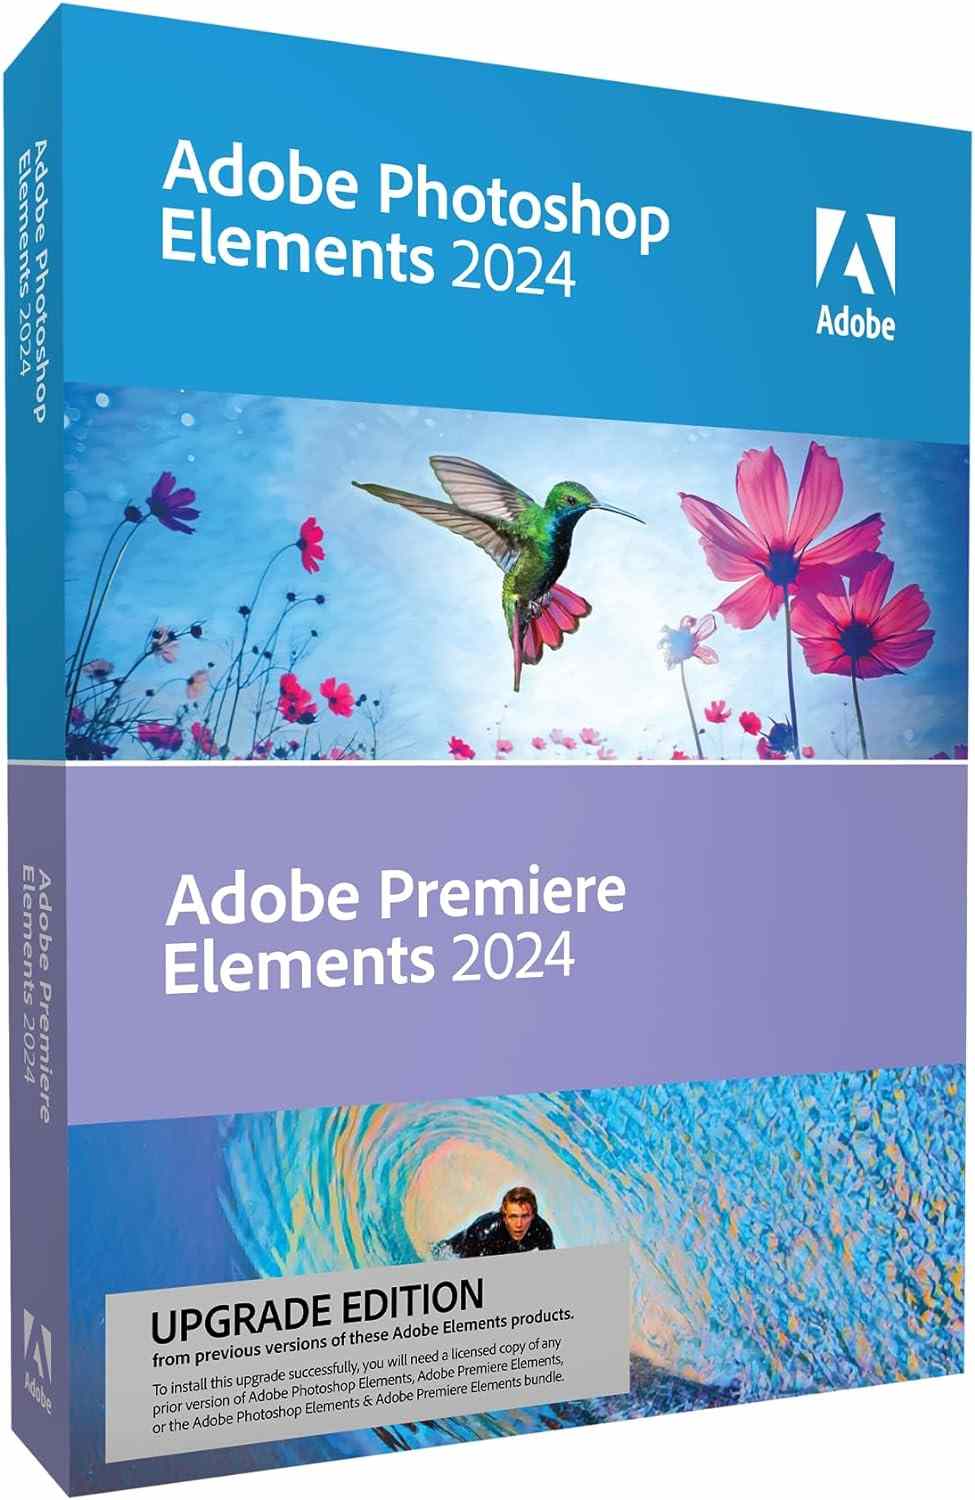 Adobe Photoshop & Adobe Premiere Elements 2024 MP ENG UPG BOX0 